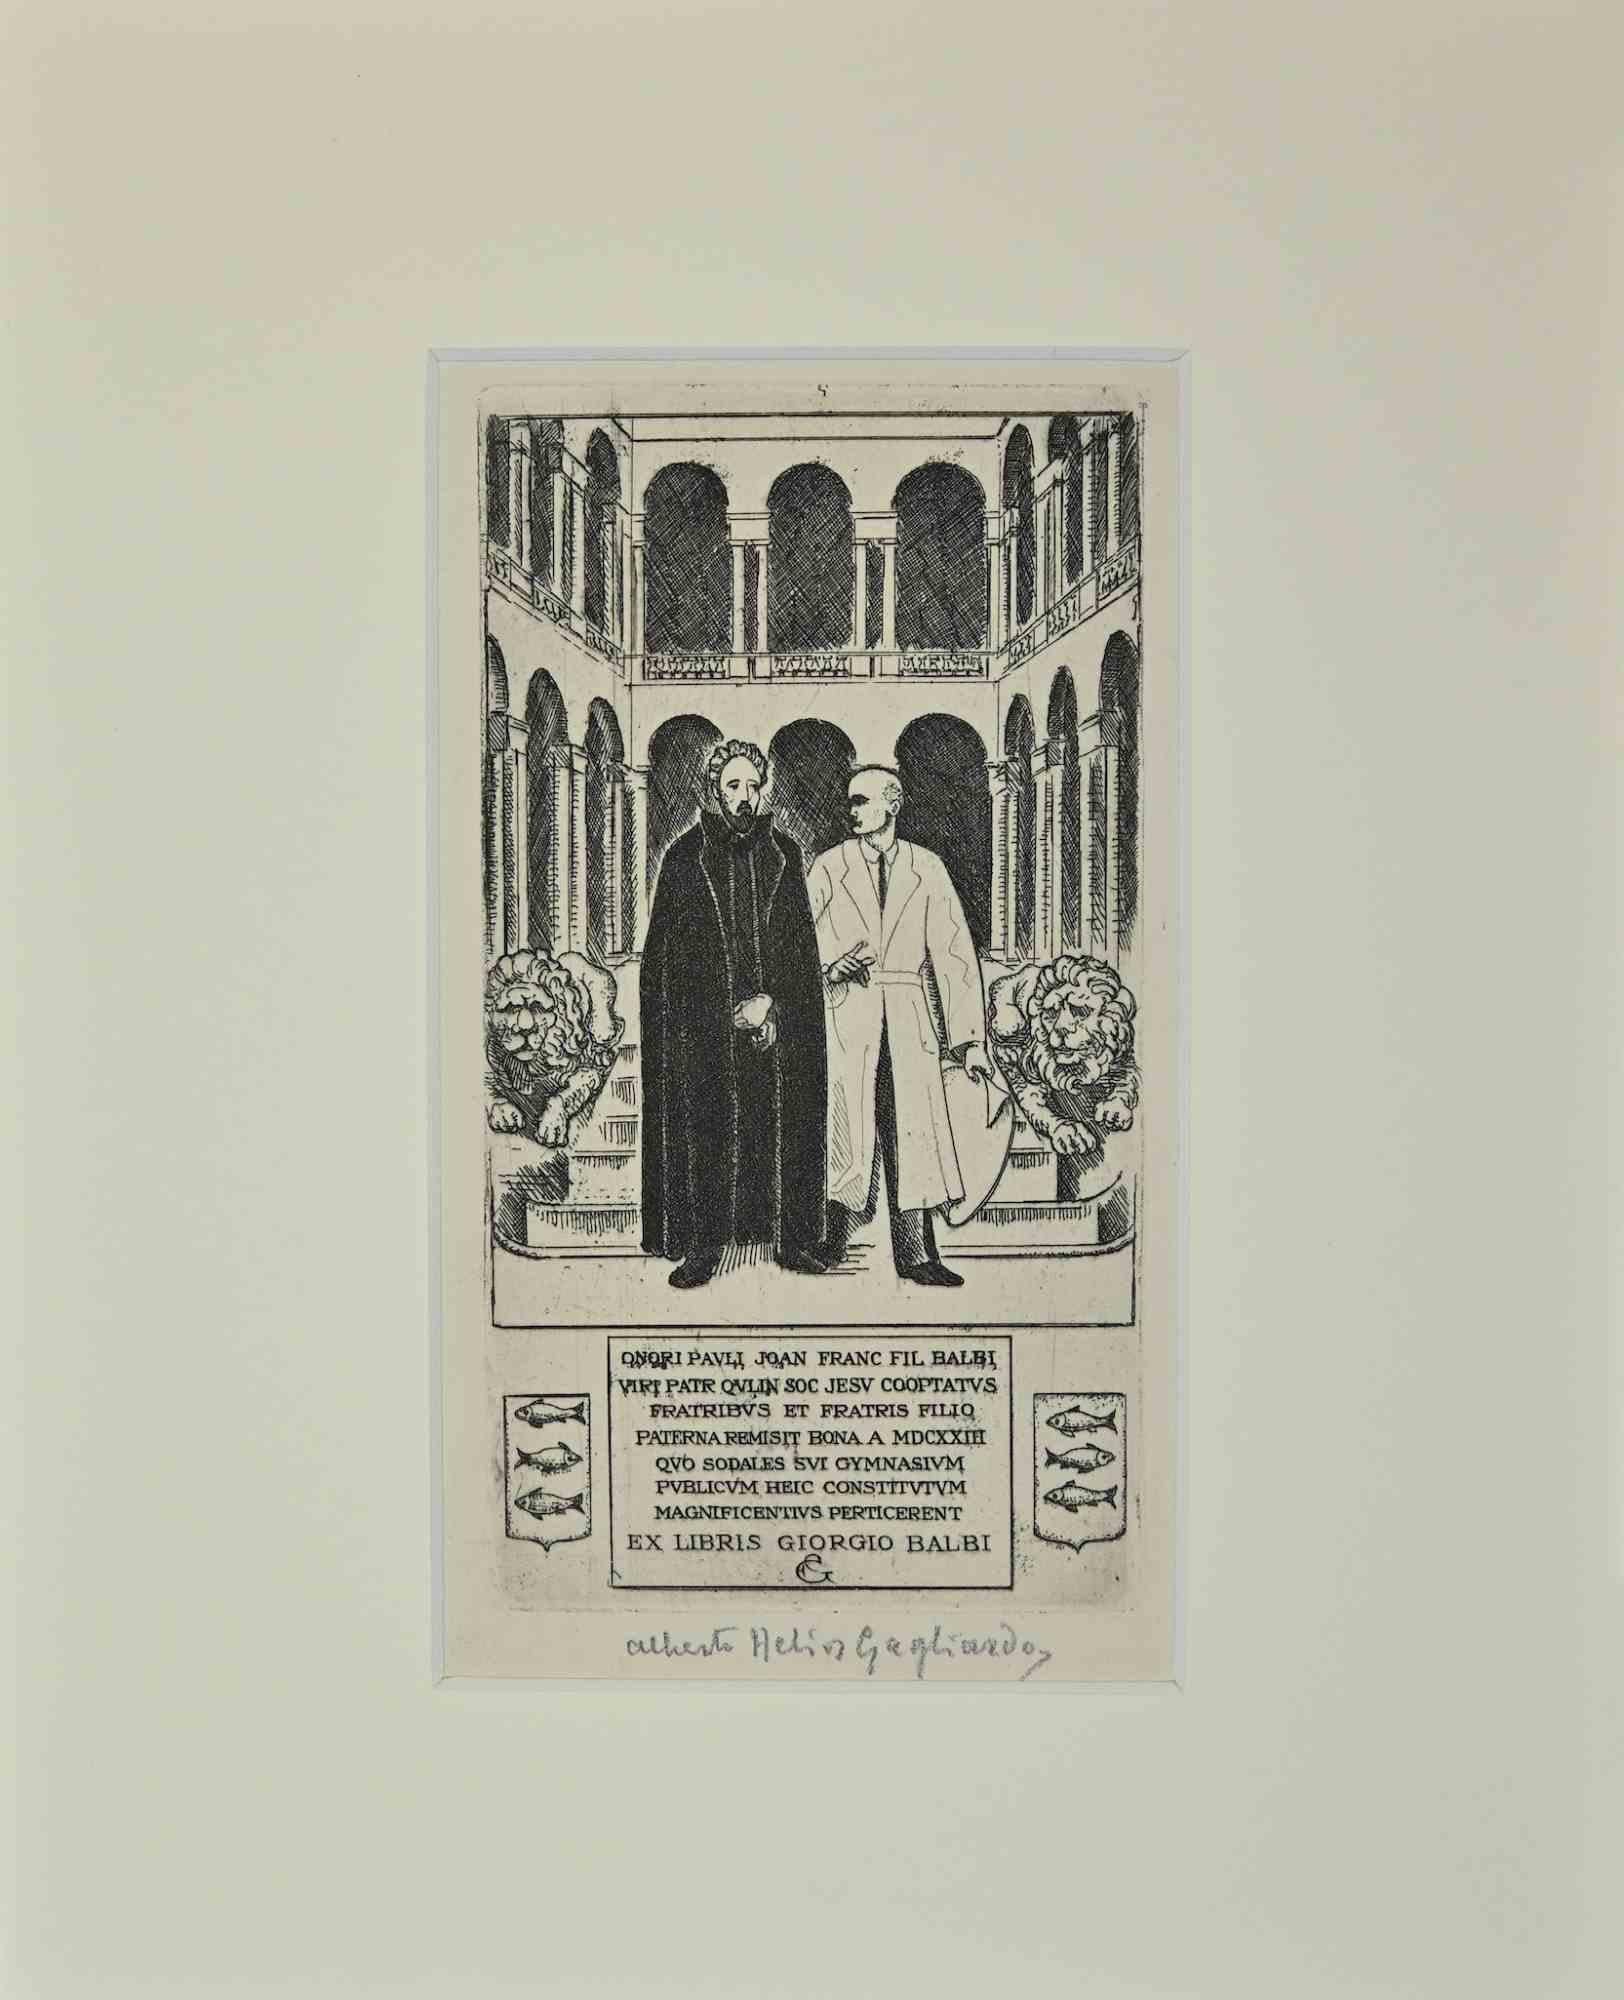  Alberto Helios Gagliardo Figurative Print - Ex Libris  -  Fil. Balbi  by A. H. Gagliardo - Etching  - Mid-20th Century